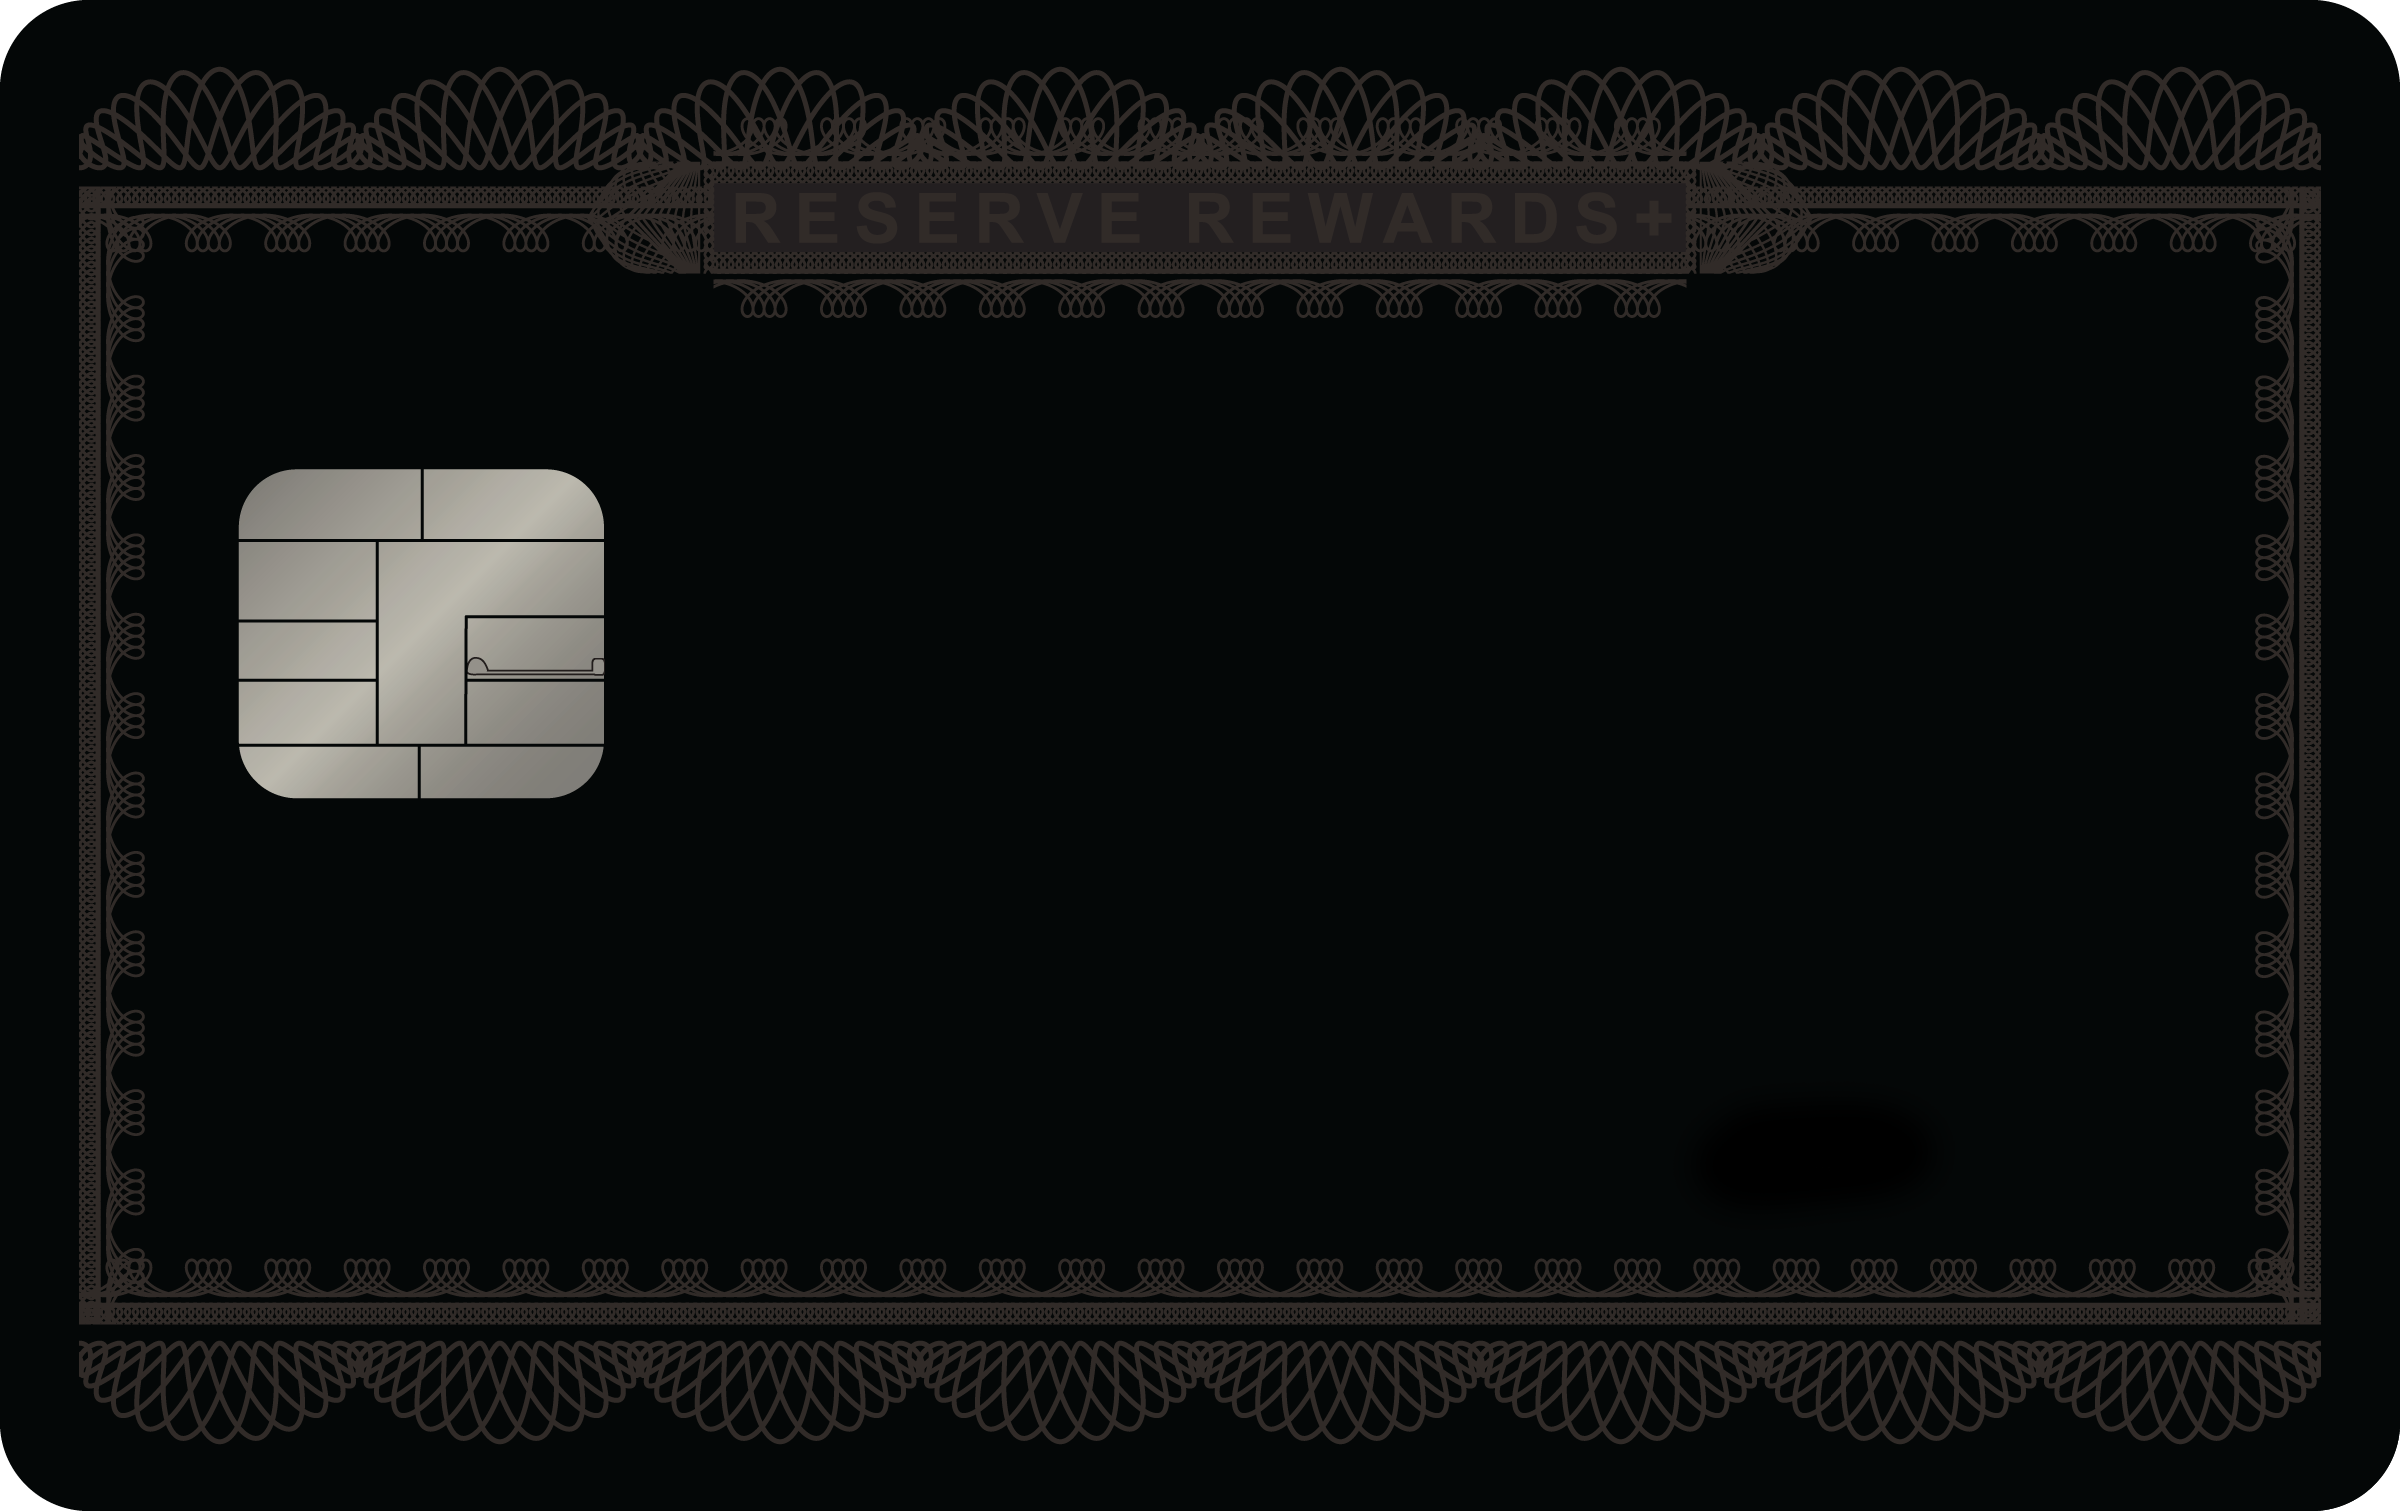 A sample of a Reserve Rewards Plus credit card